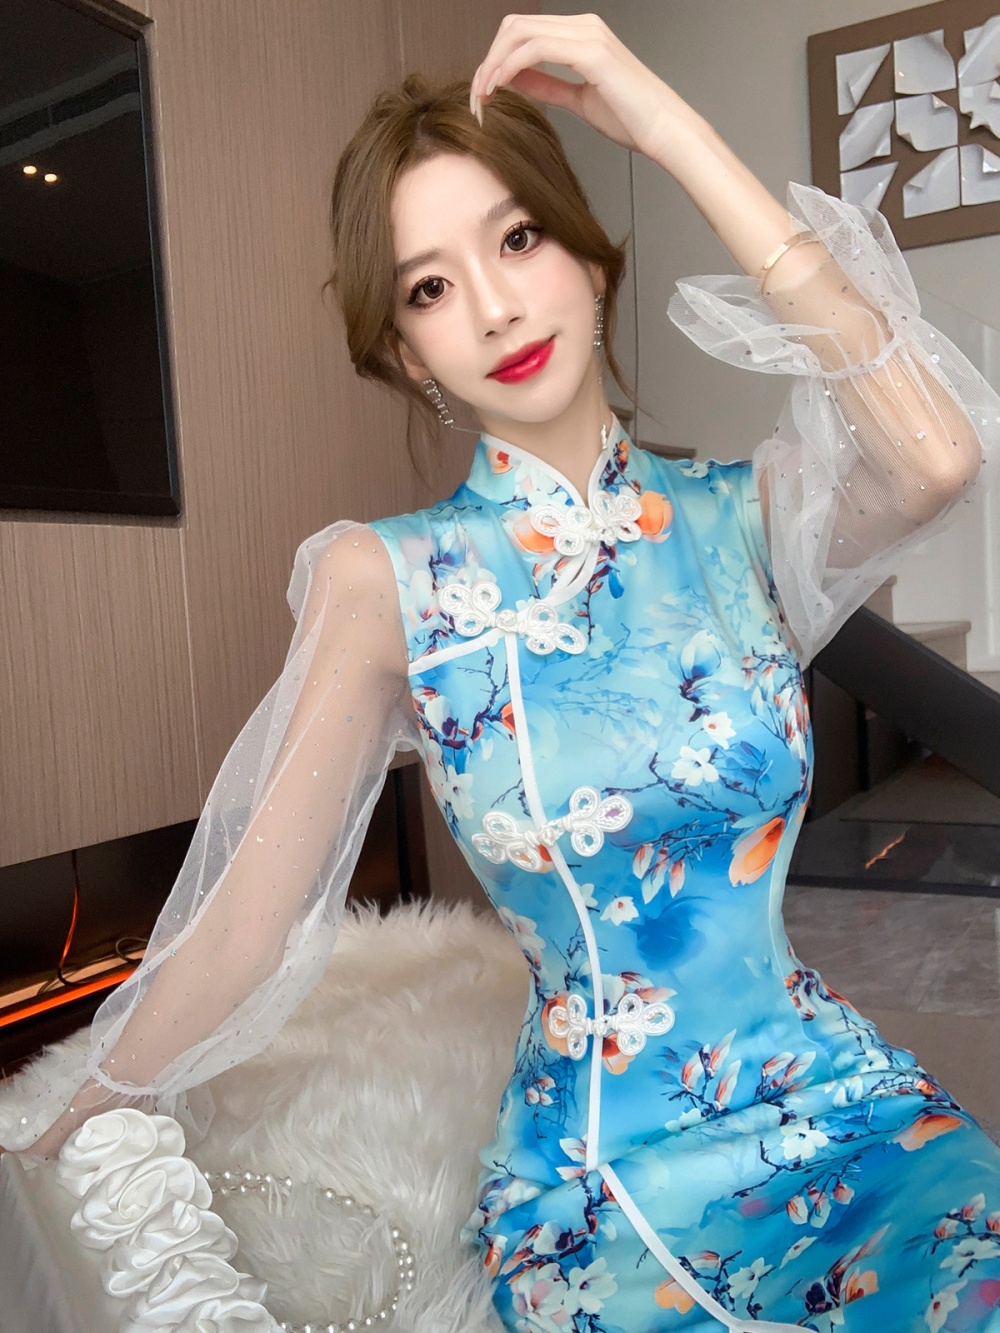 Long Chinese style printing cheongsam slim split dress